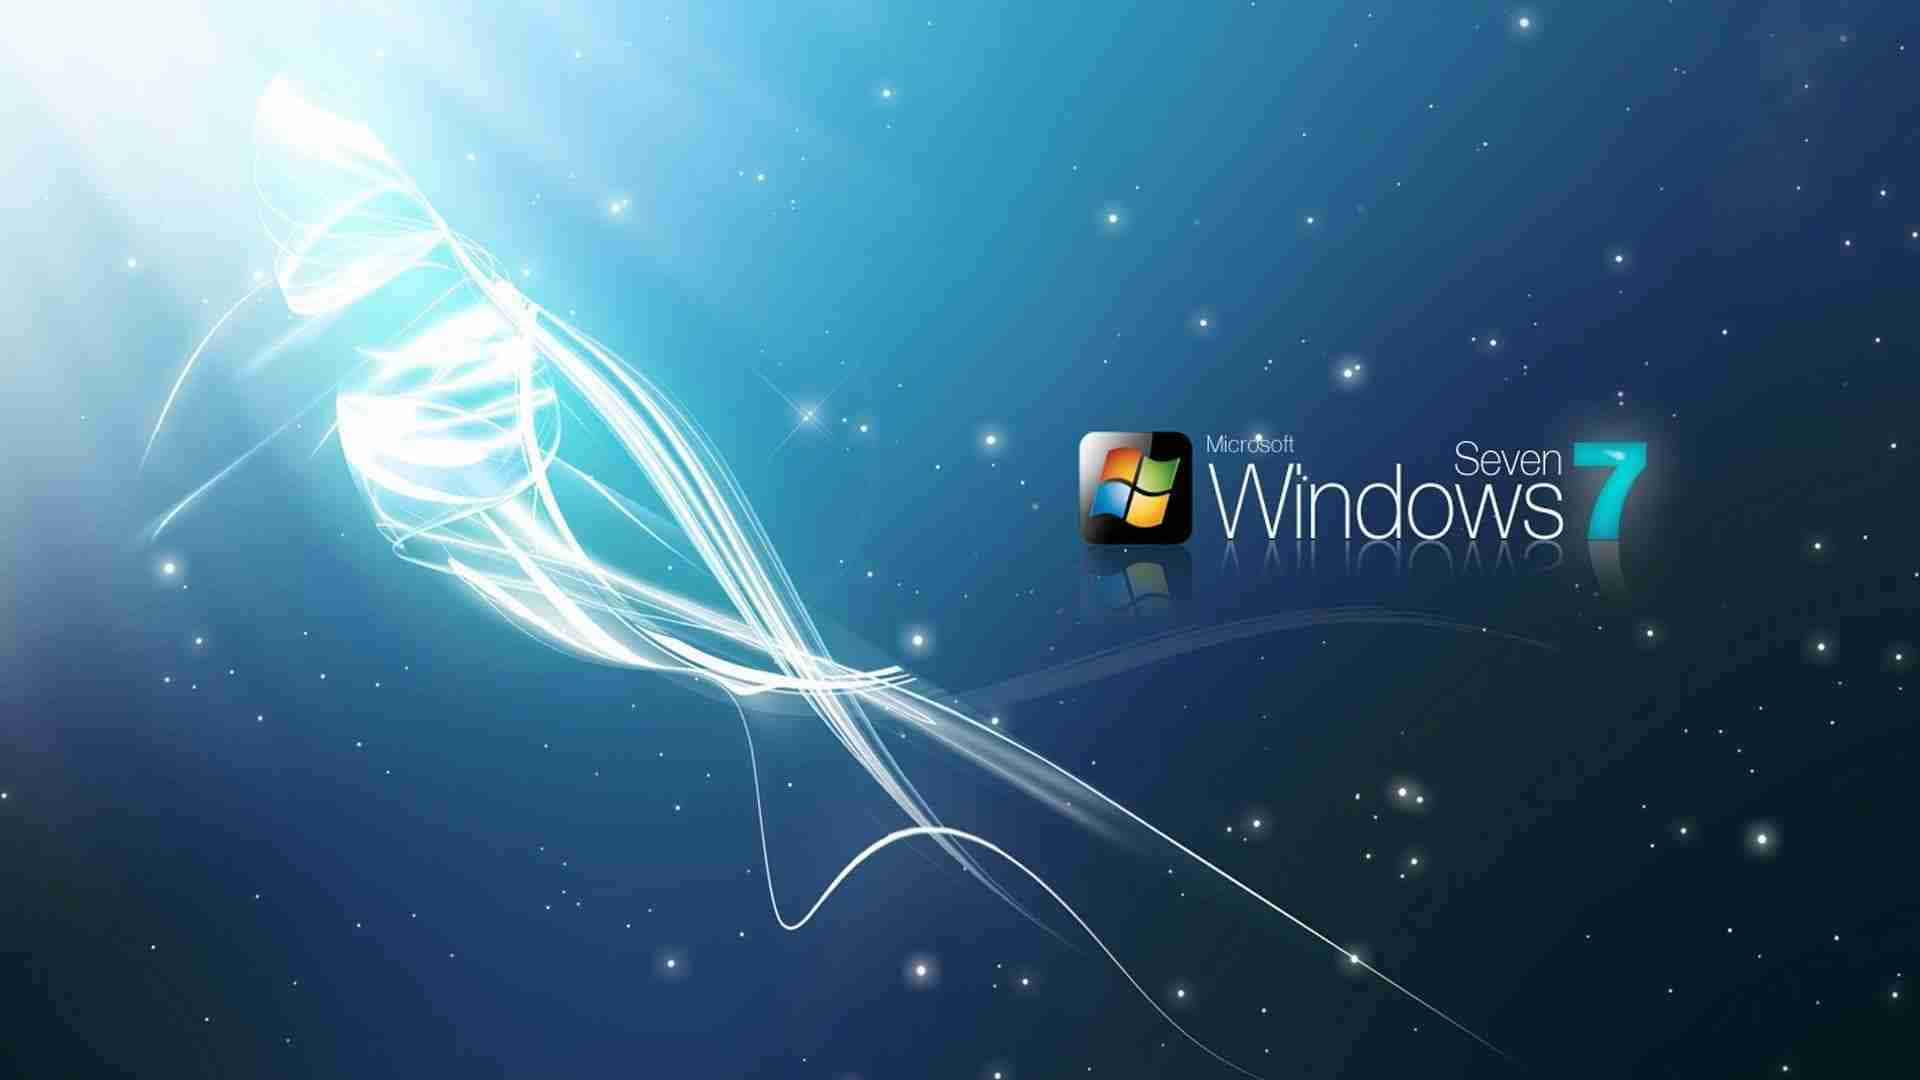 "Windows 7 Background Wallpaper"